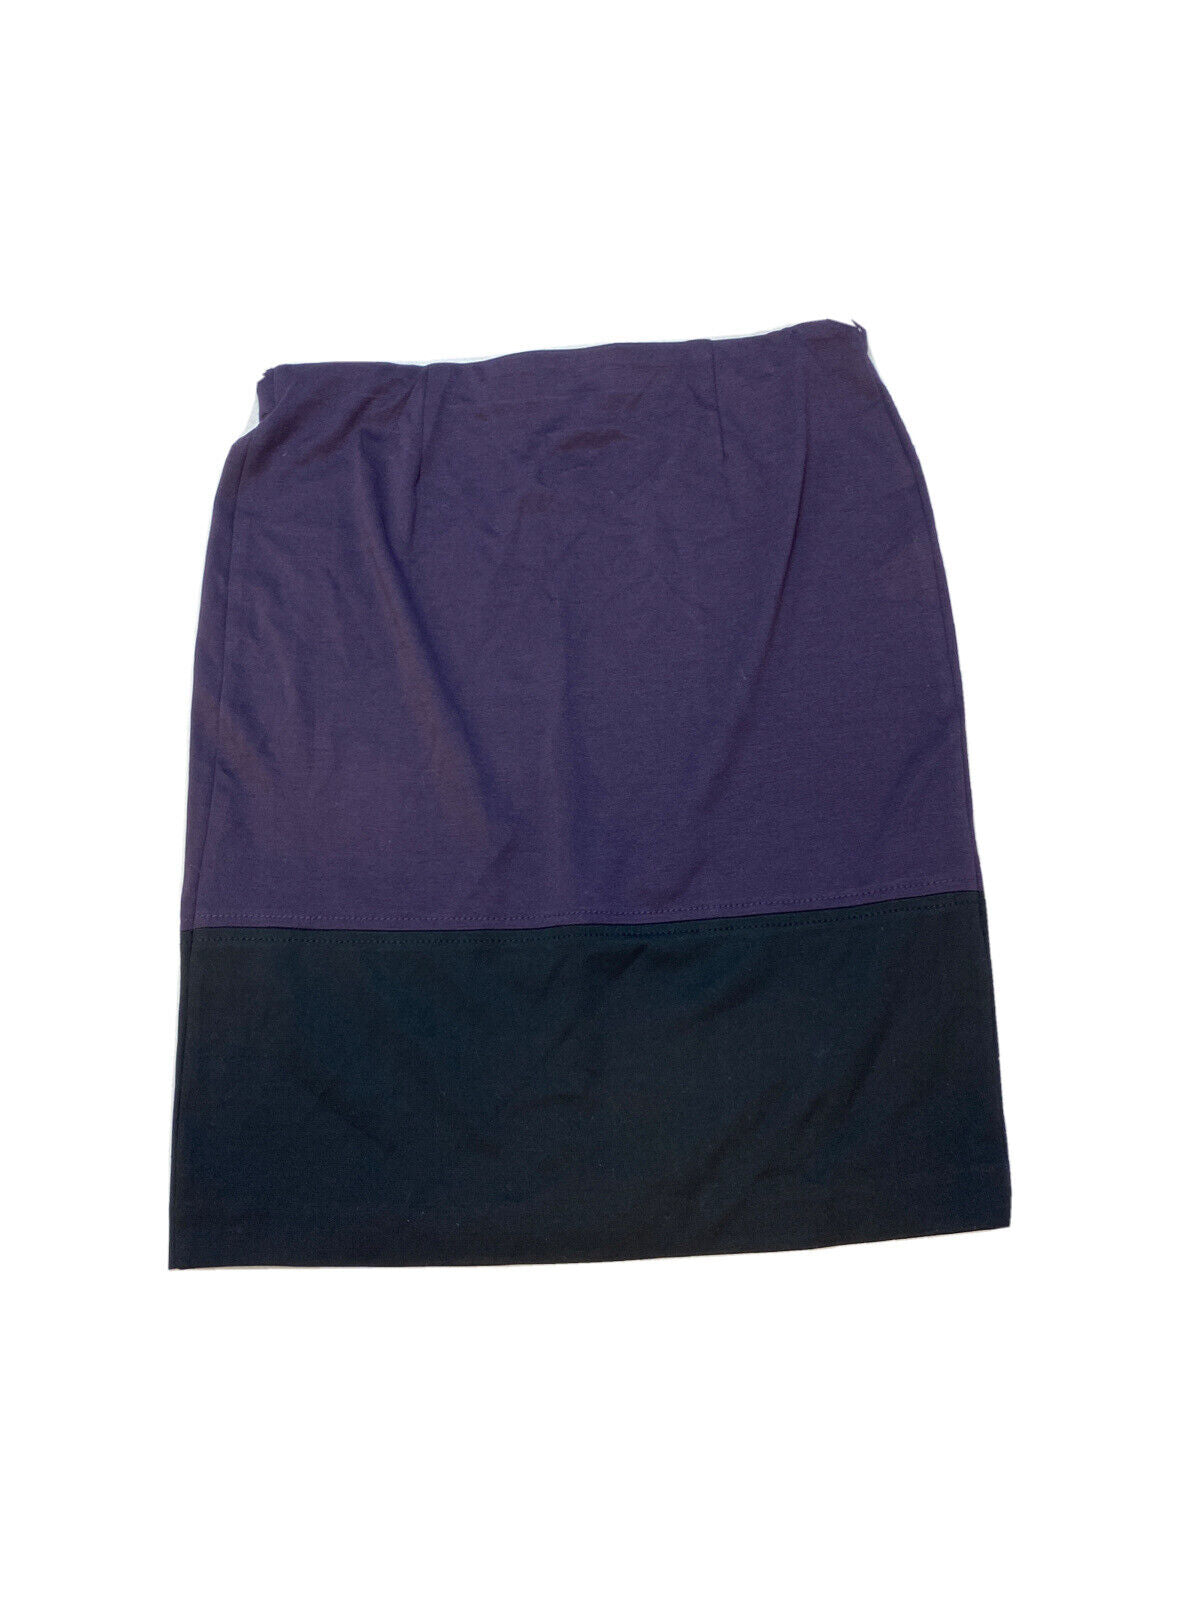 NEW Daisy Fuentes Women's Purple Stretch Straight Skirt Sz M